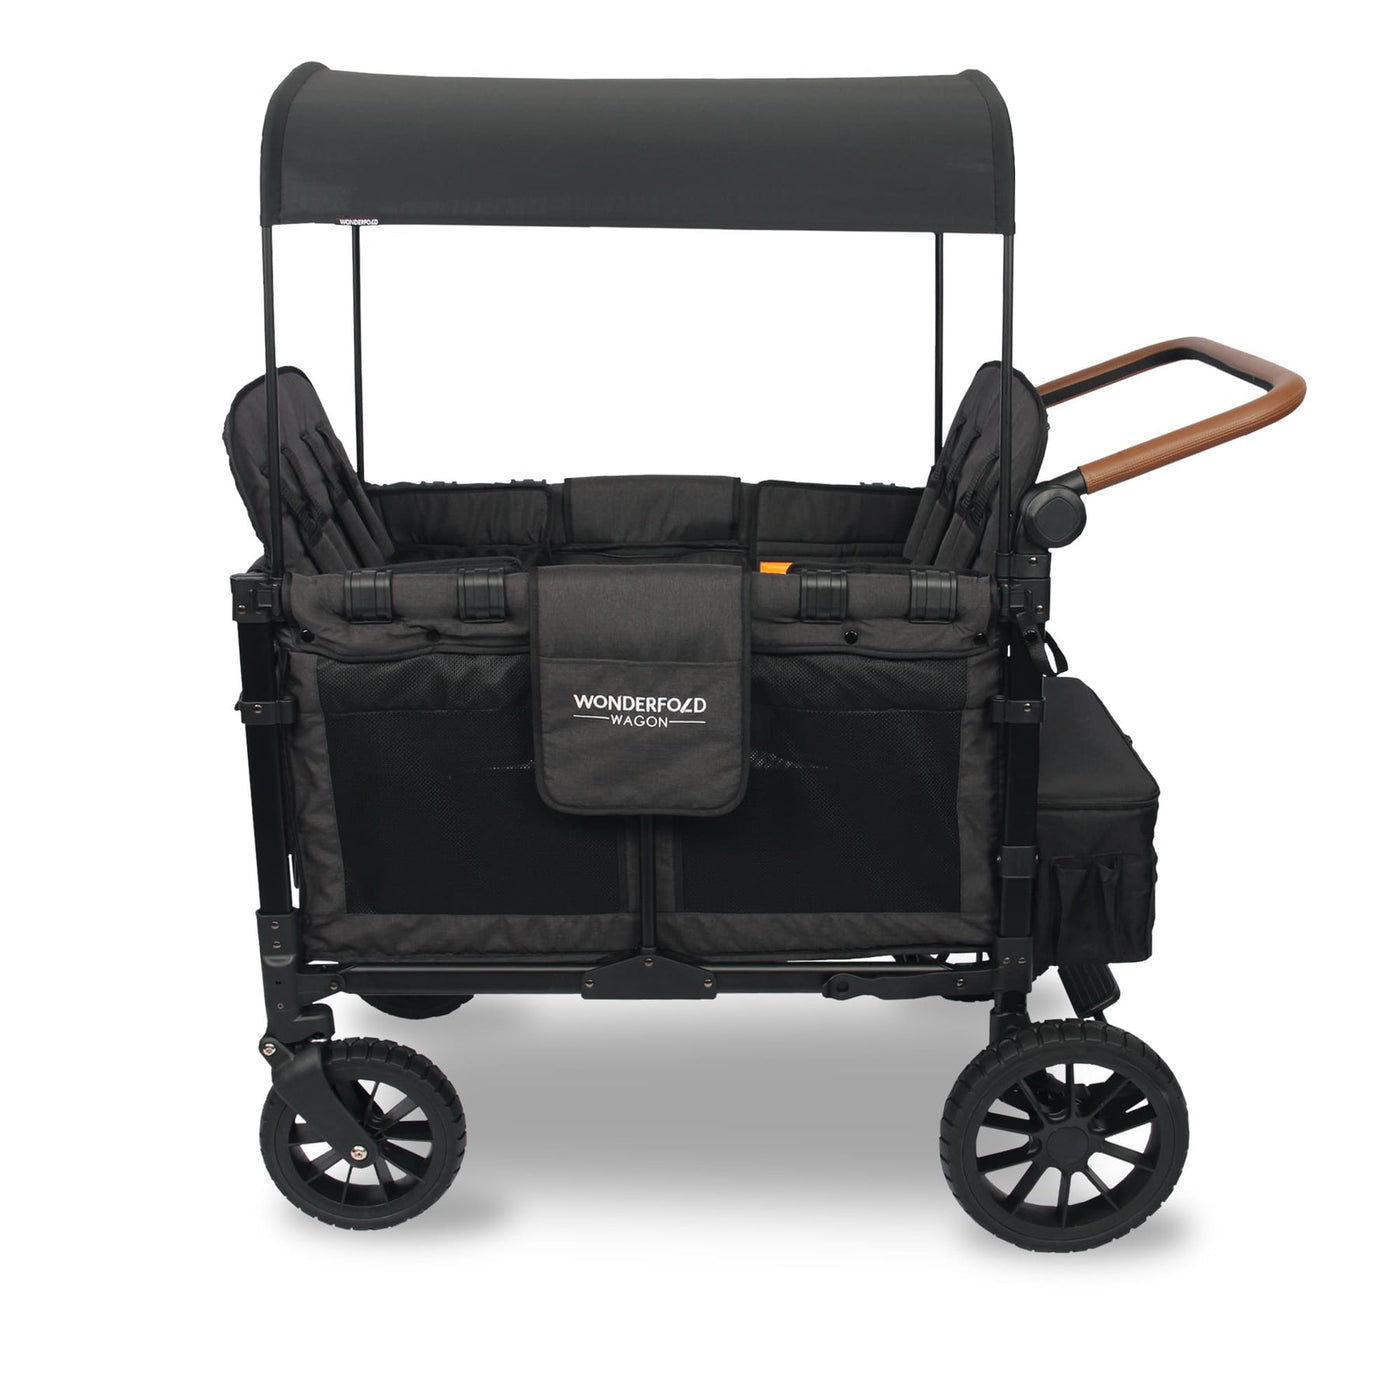 Wonderfold Wagon W4 Luxe Quad Stroller Wagon (4 Seater) - Black